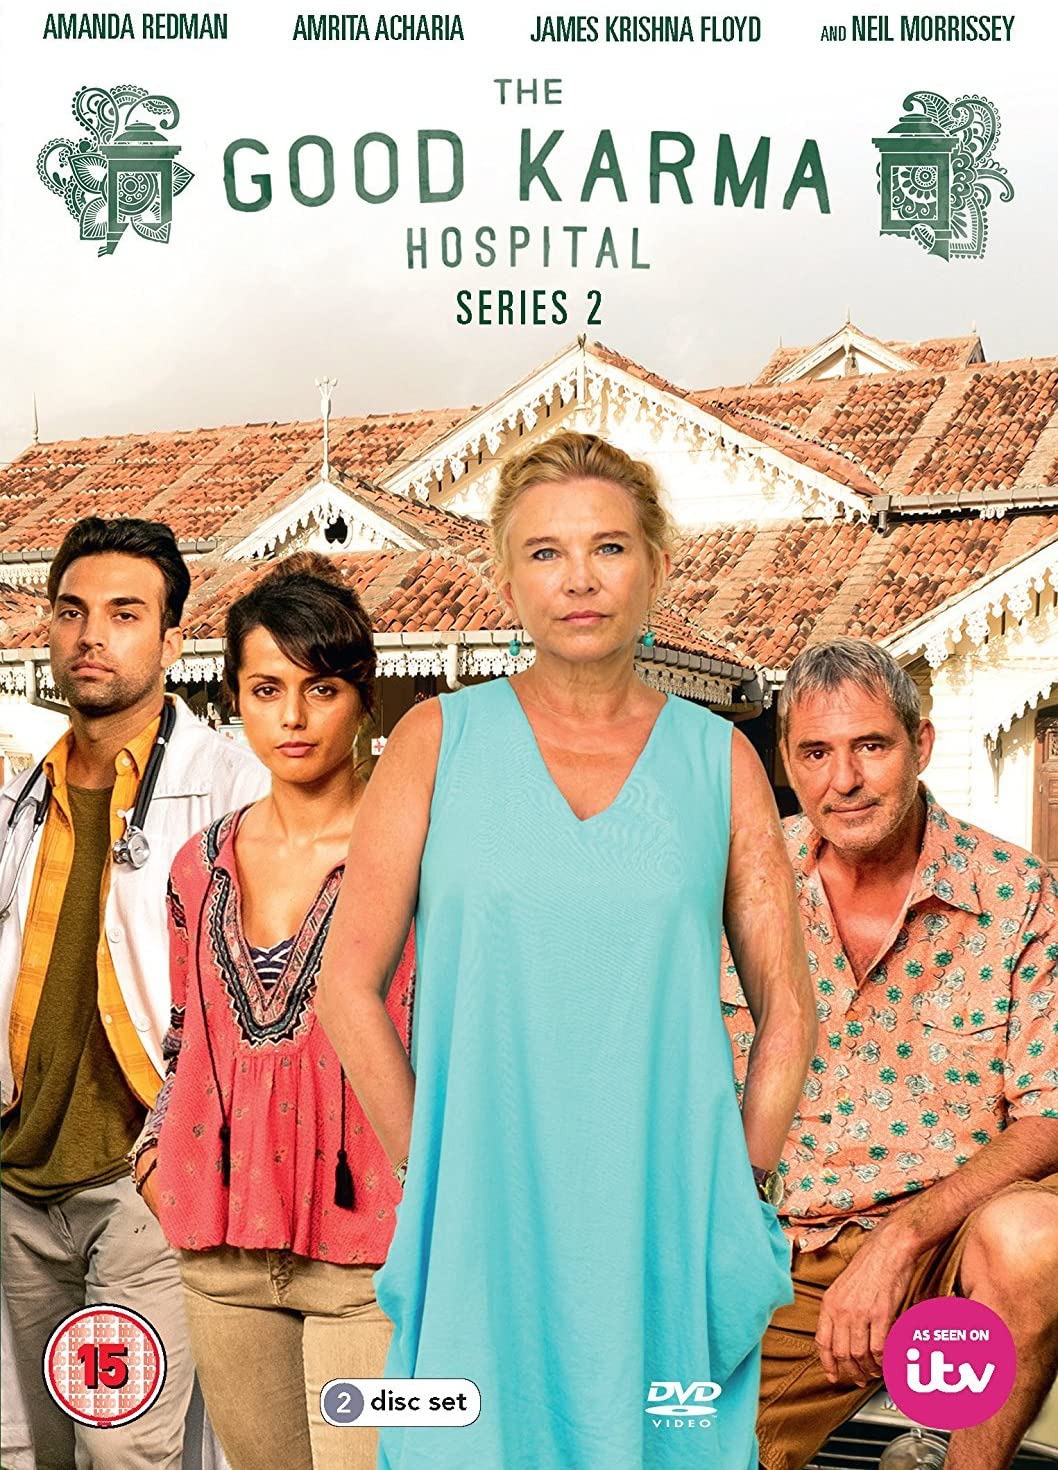 The Good Karma Hospital - Series 2 - Drama [DVD]